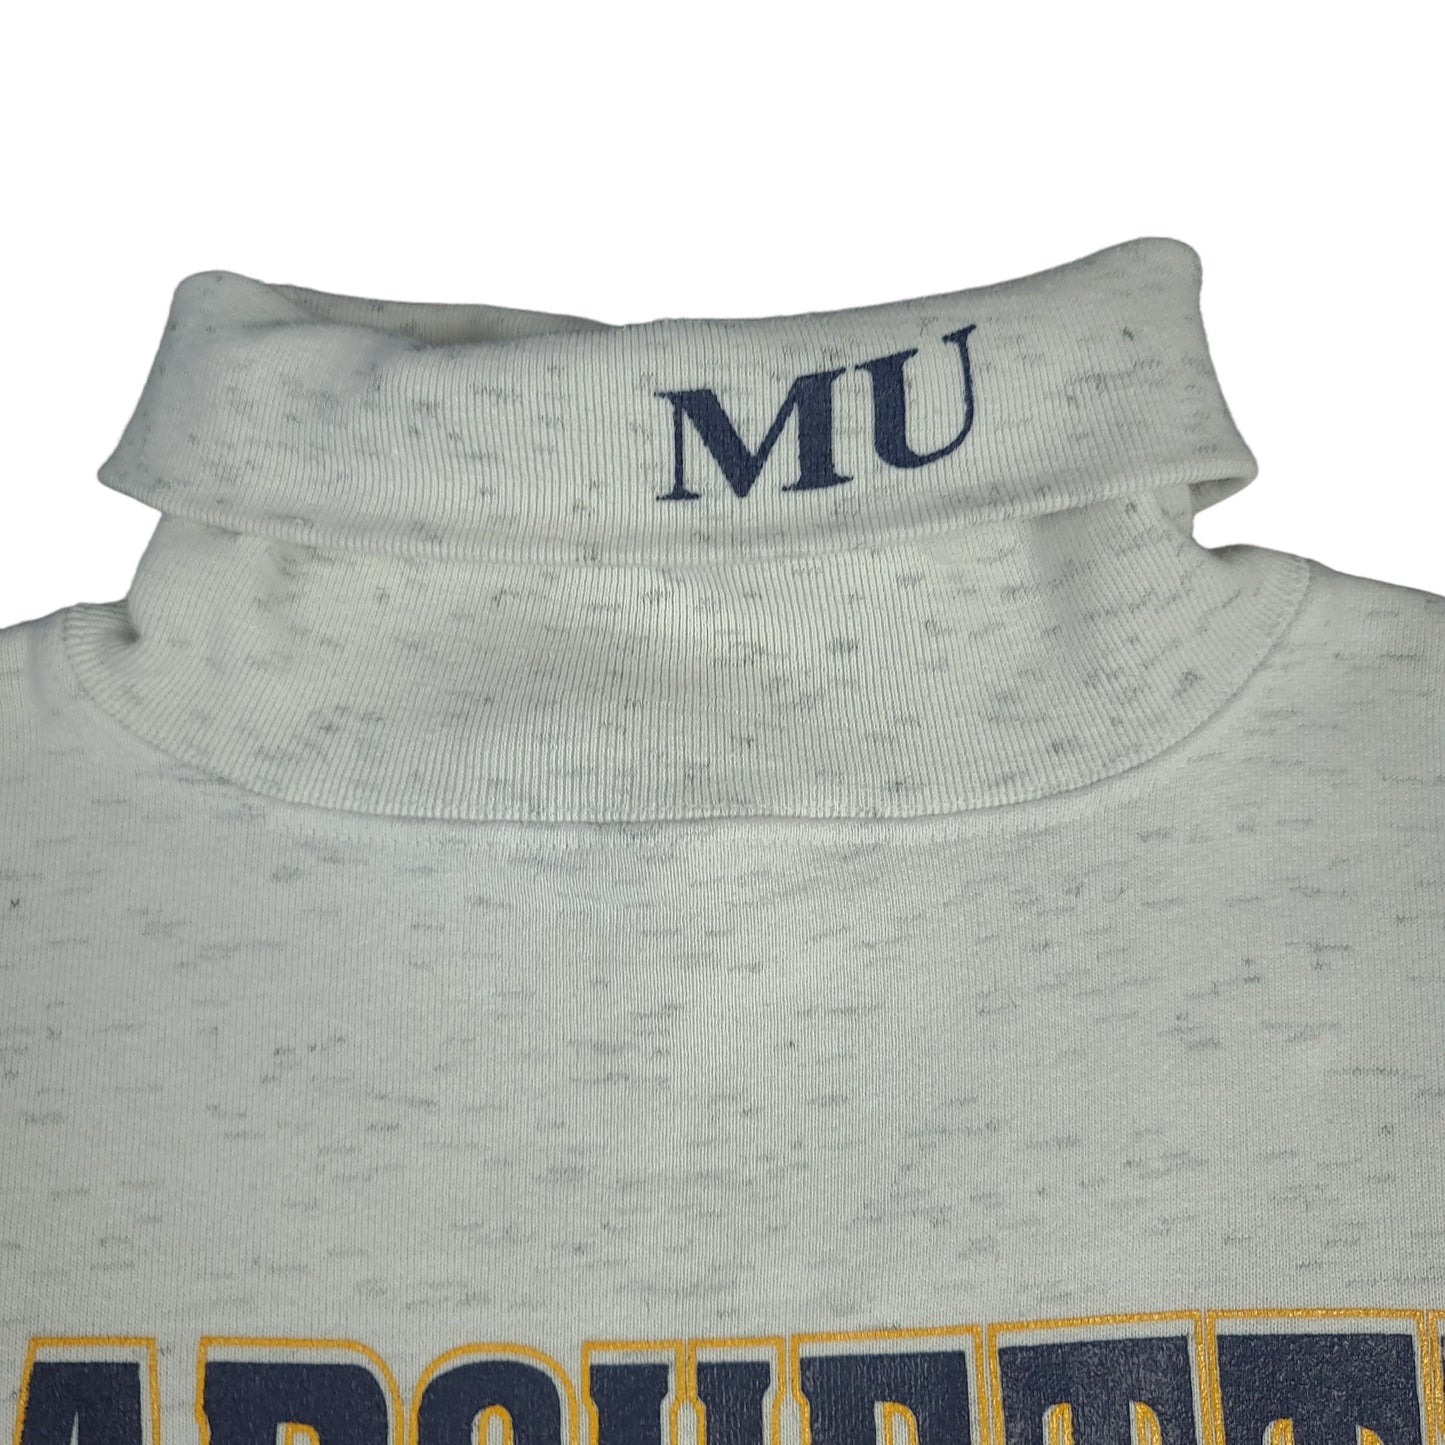 Vintage Marquette University Gray Turtle Neck Sweatshirt